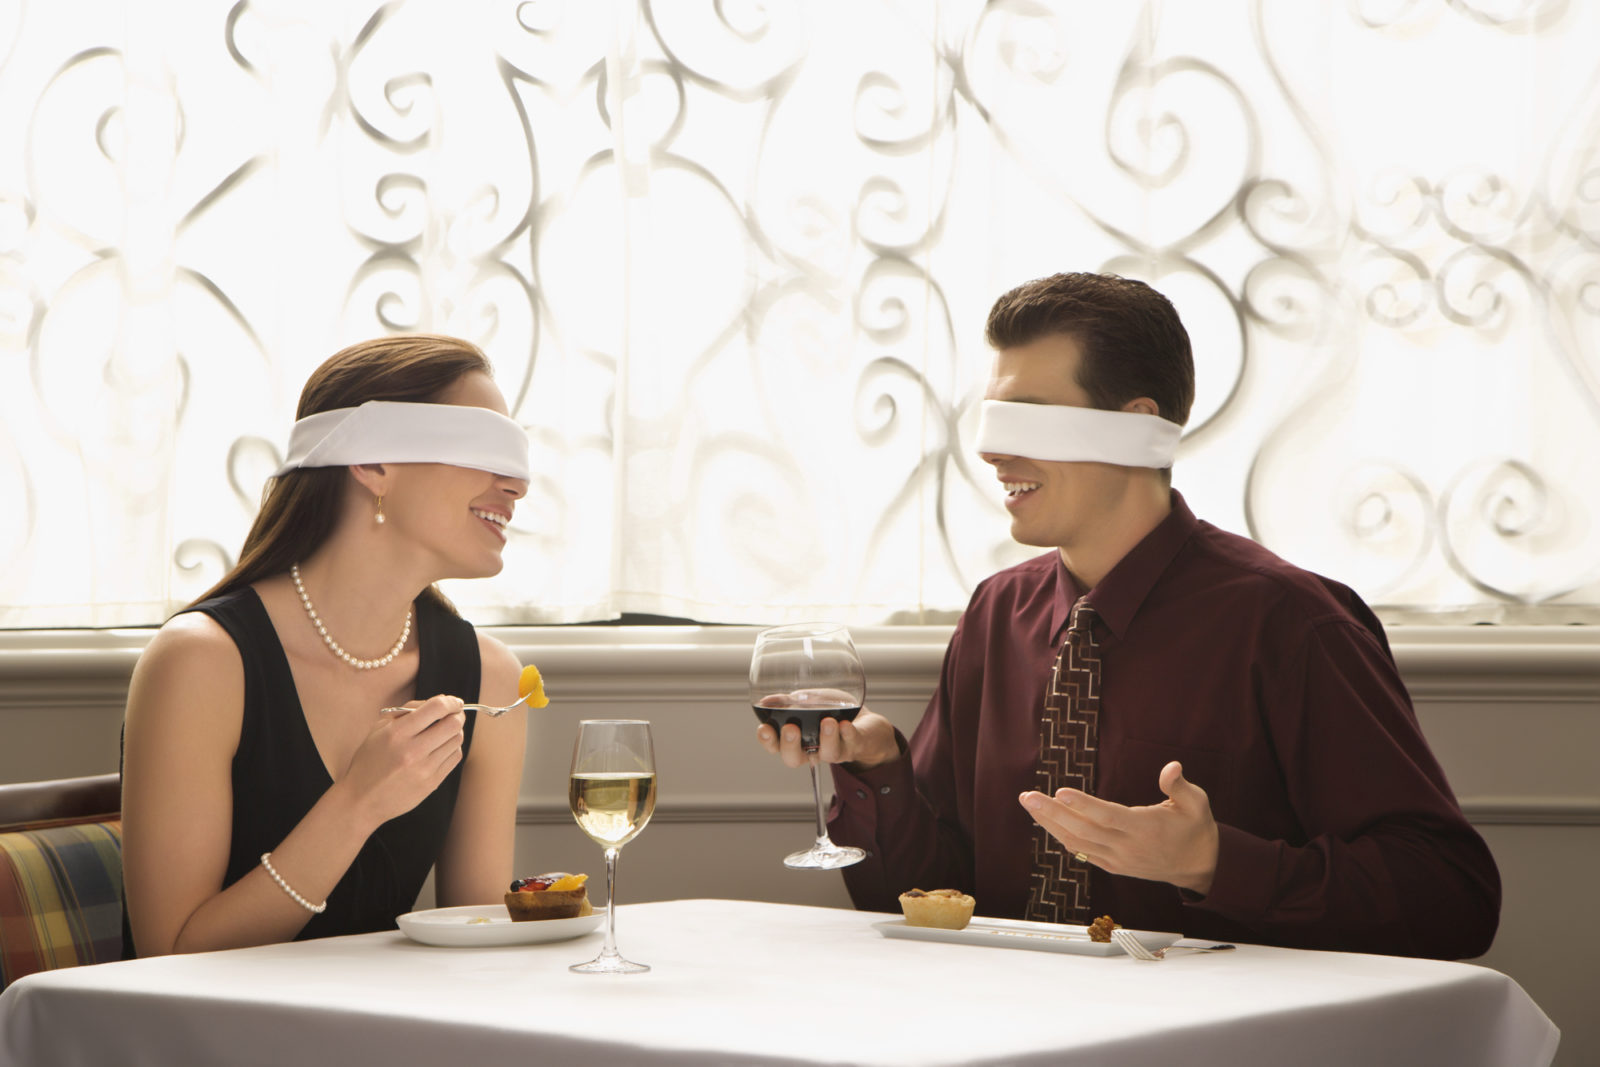 Blind Restaurant theme for events